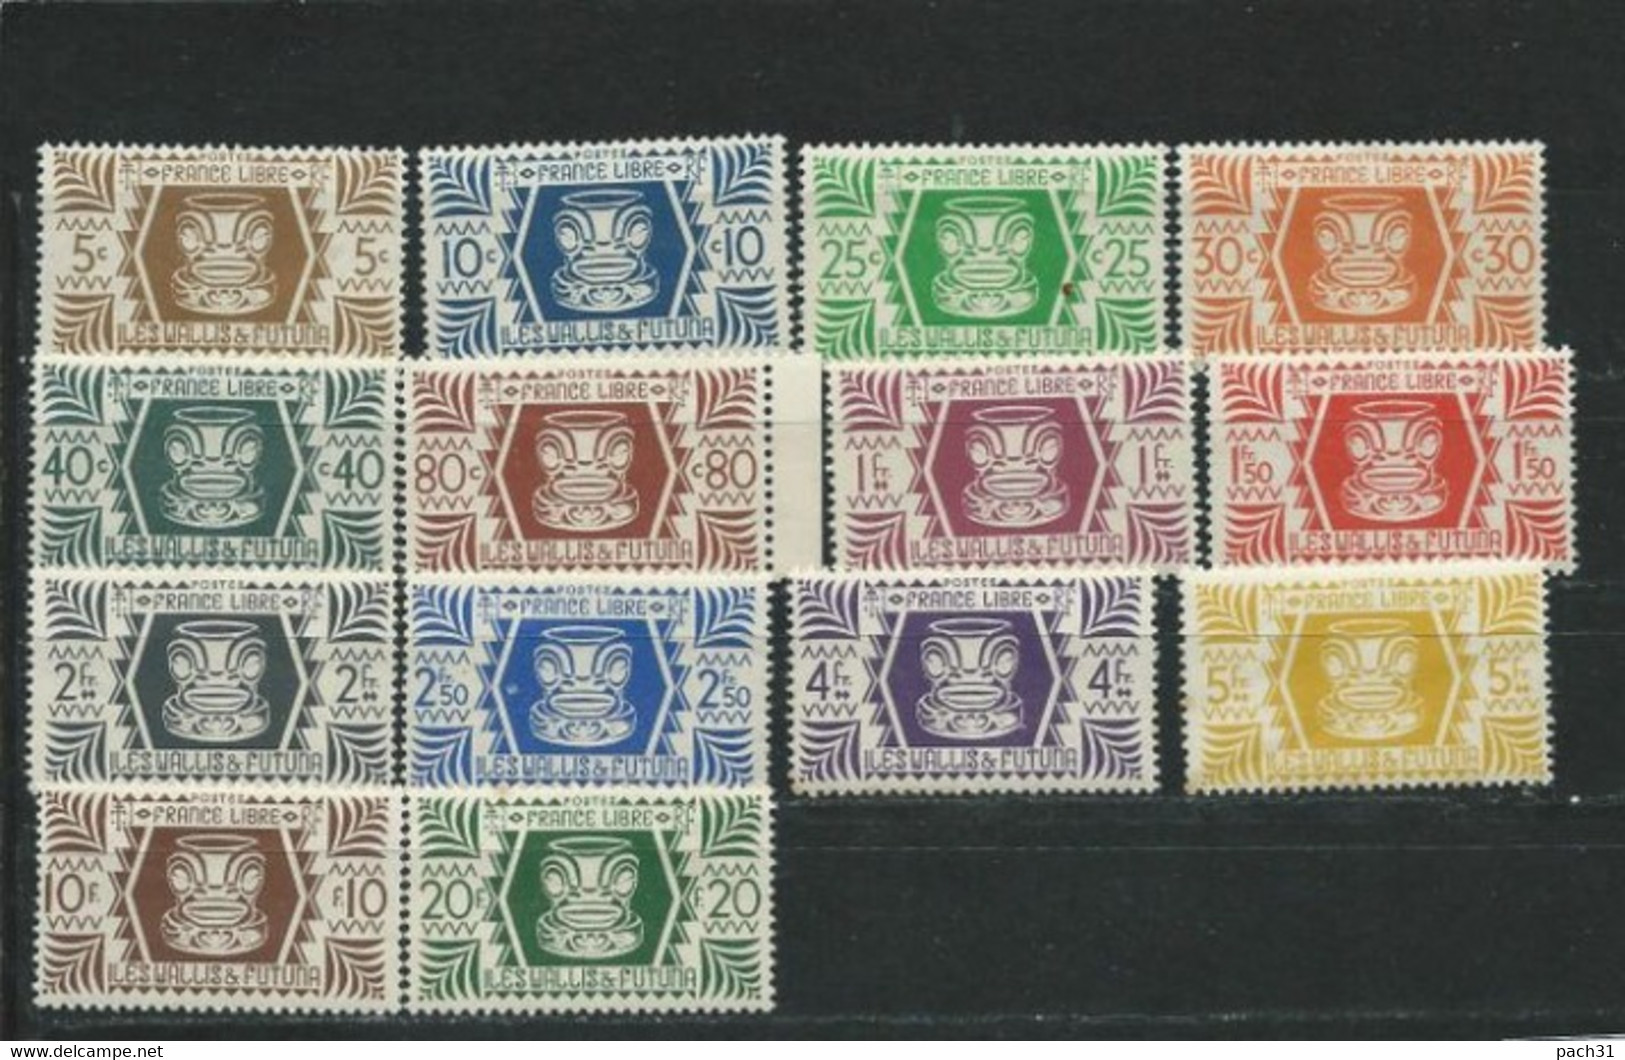 Wallis Et Futuna   N° YT 133 à 146 Neufs - Colecciones & Series